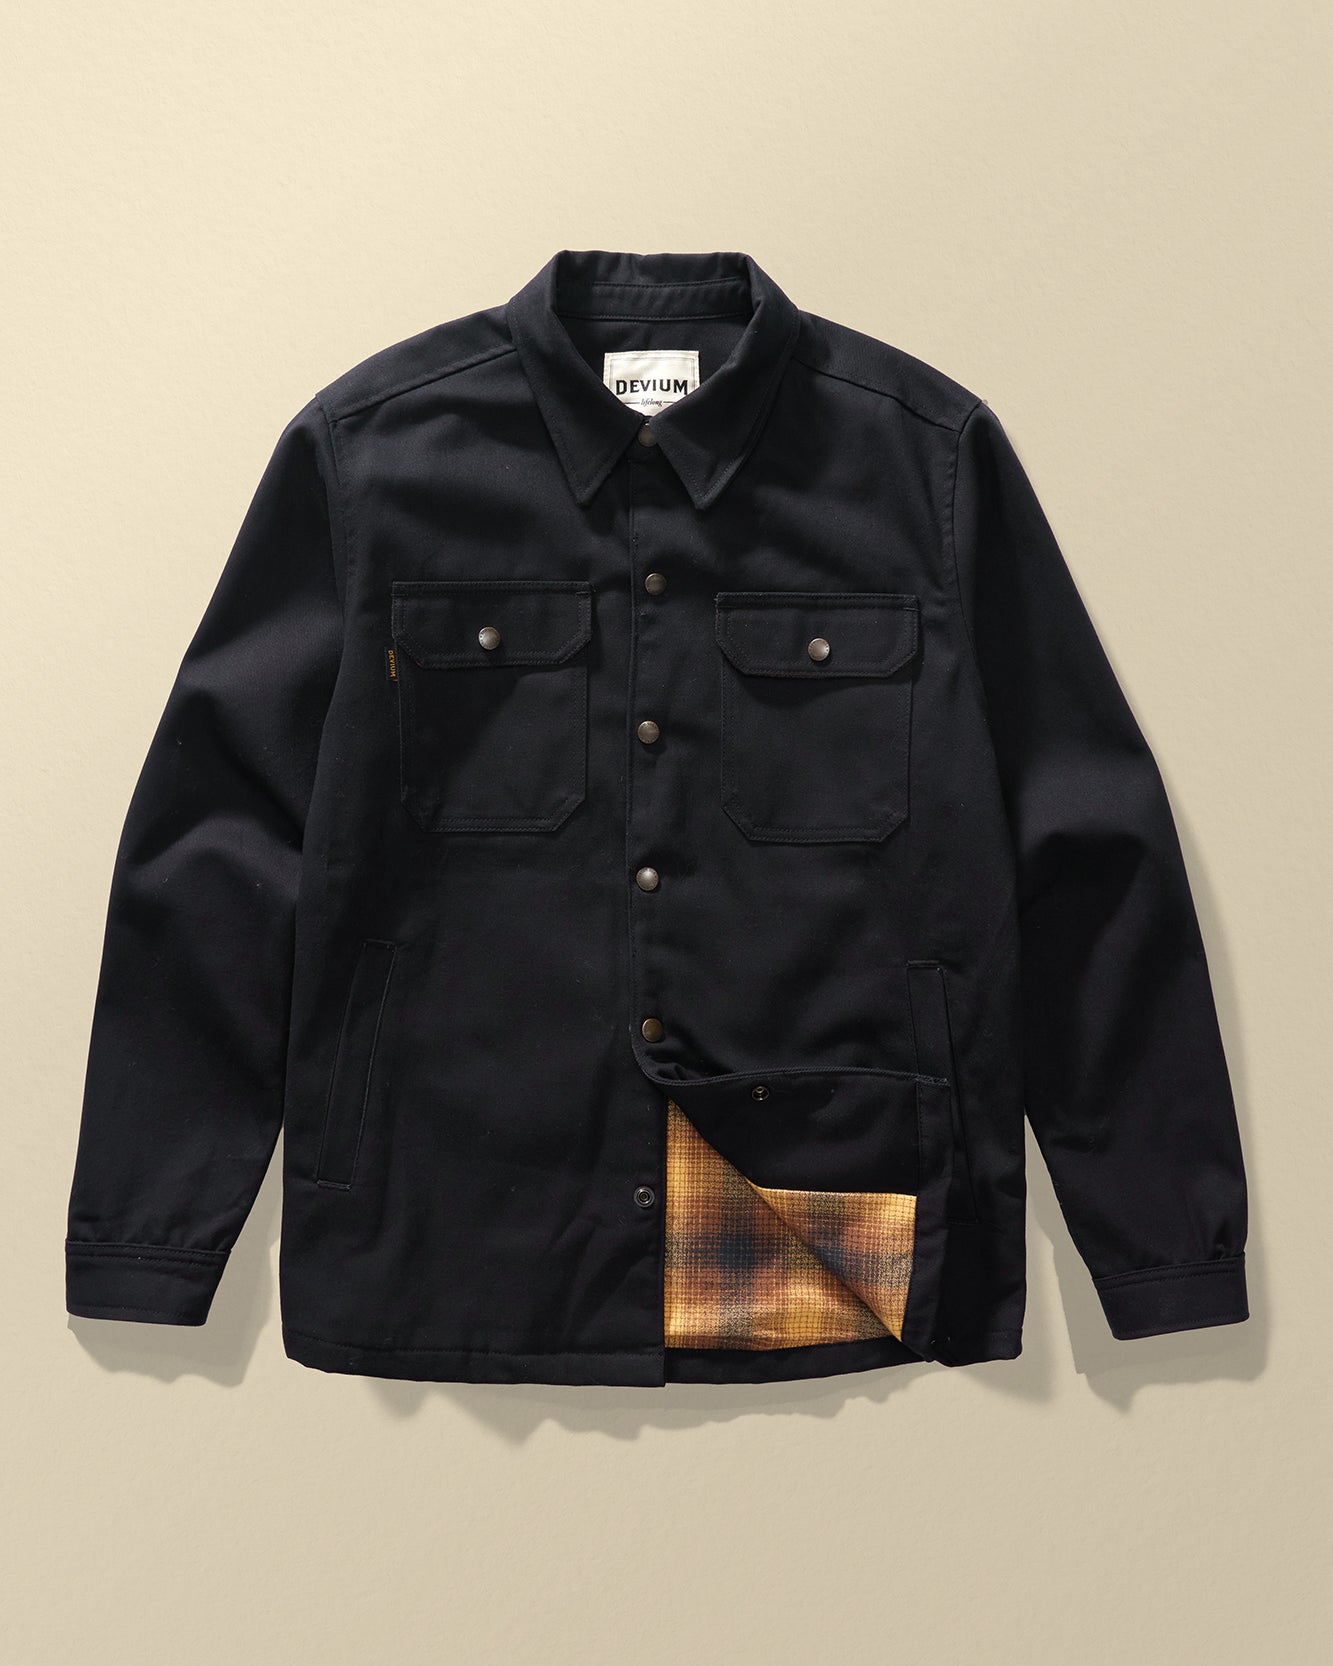 Royale Limited Edition Flannel-Lined Denim Jacket